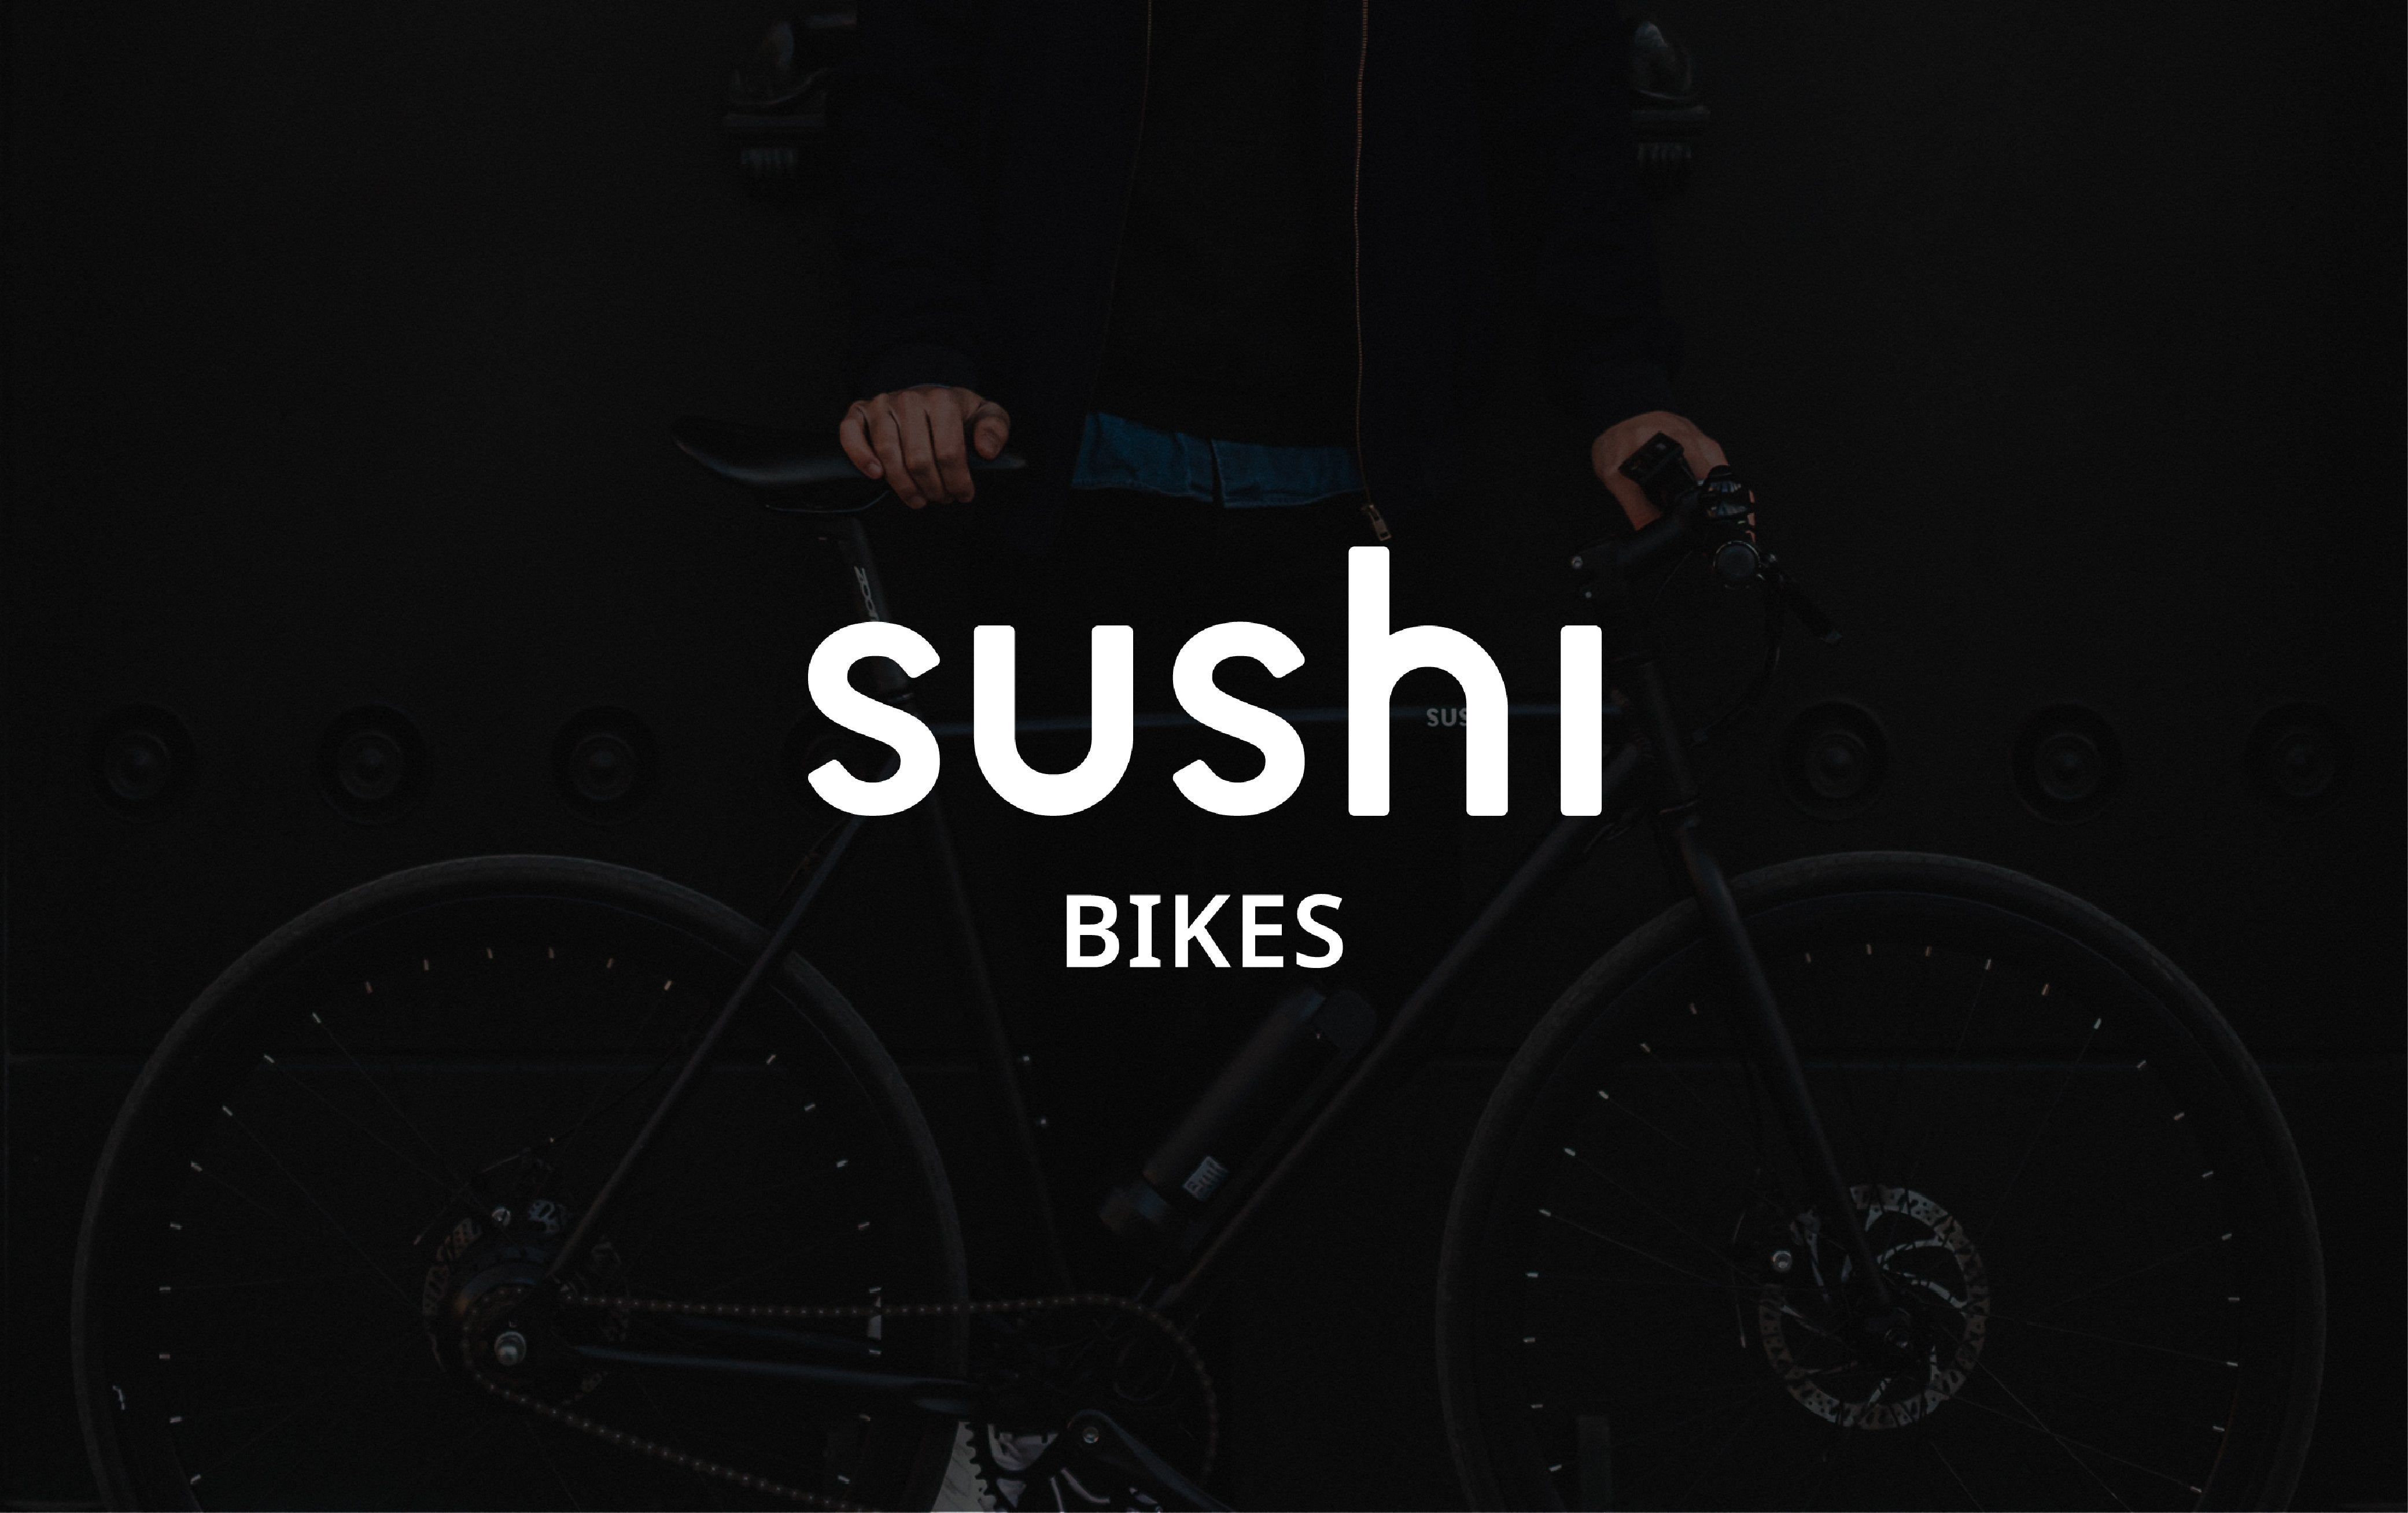 SUSHI Bikes